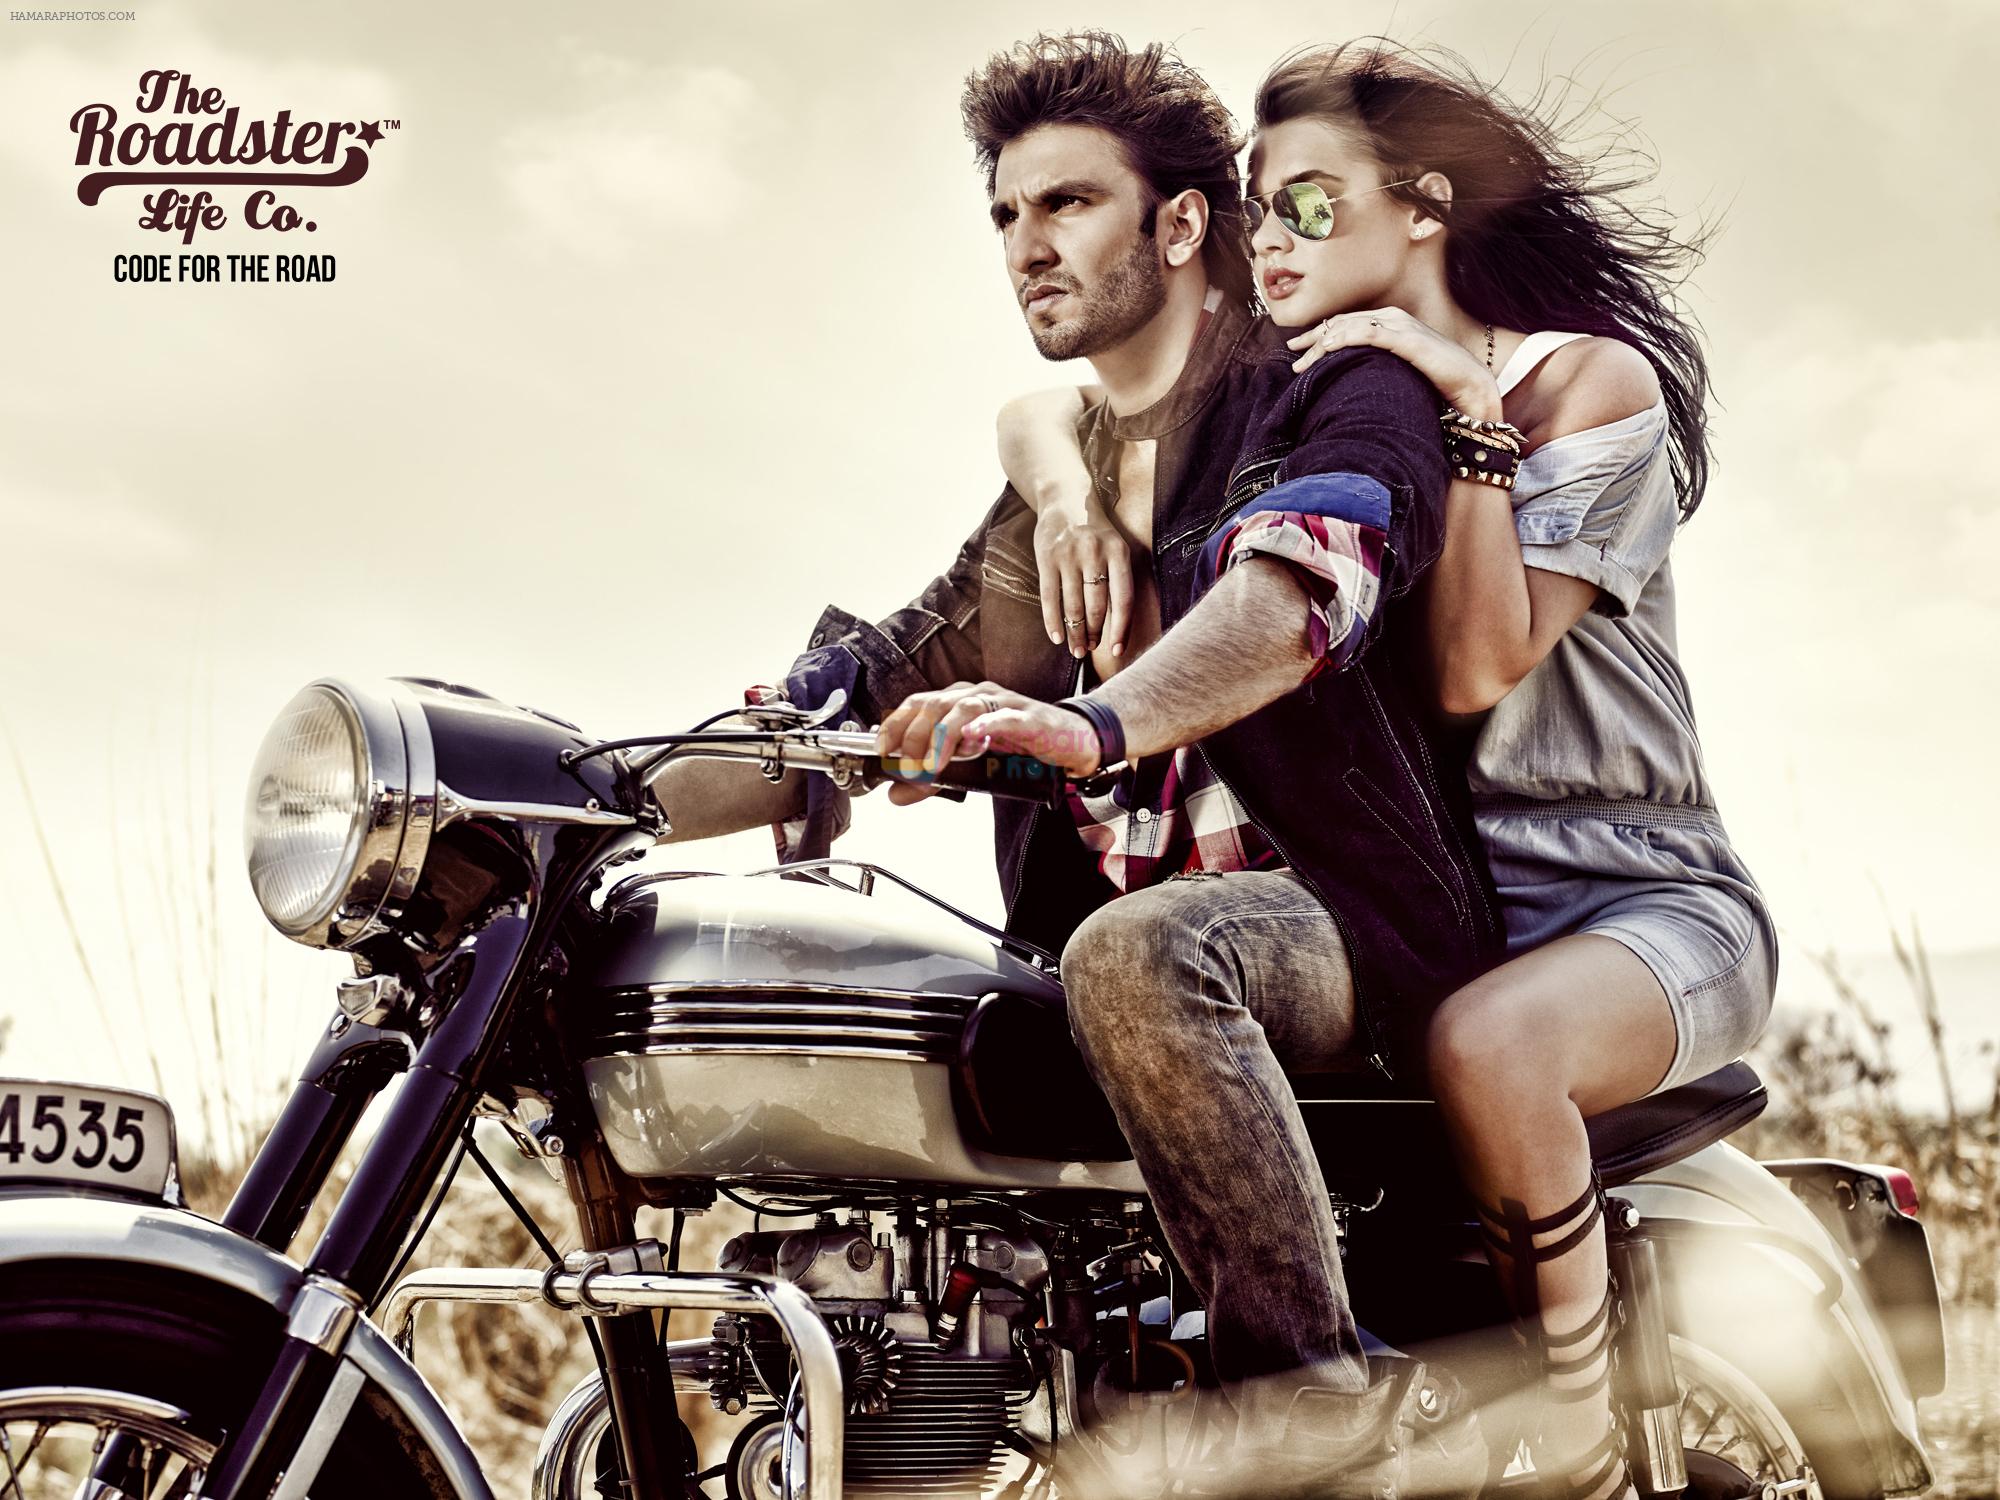 Myntra.com ropes In Ranveer Singh as the Brand Ambassador for Roadster